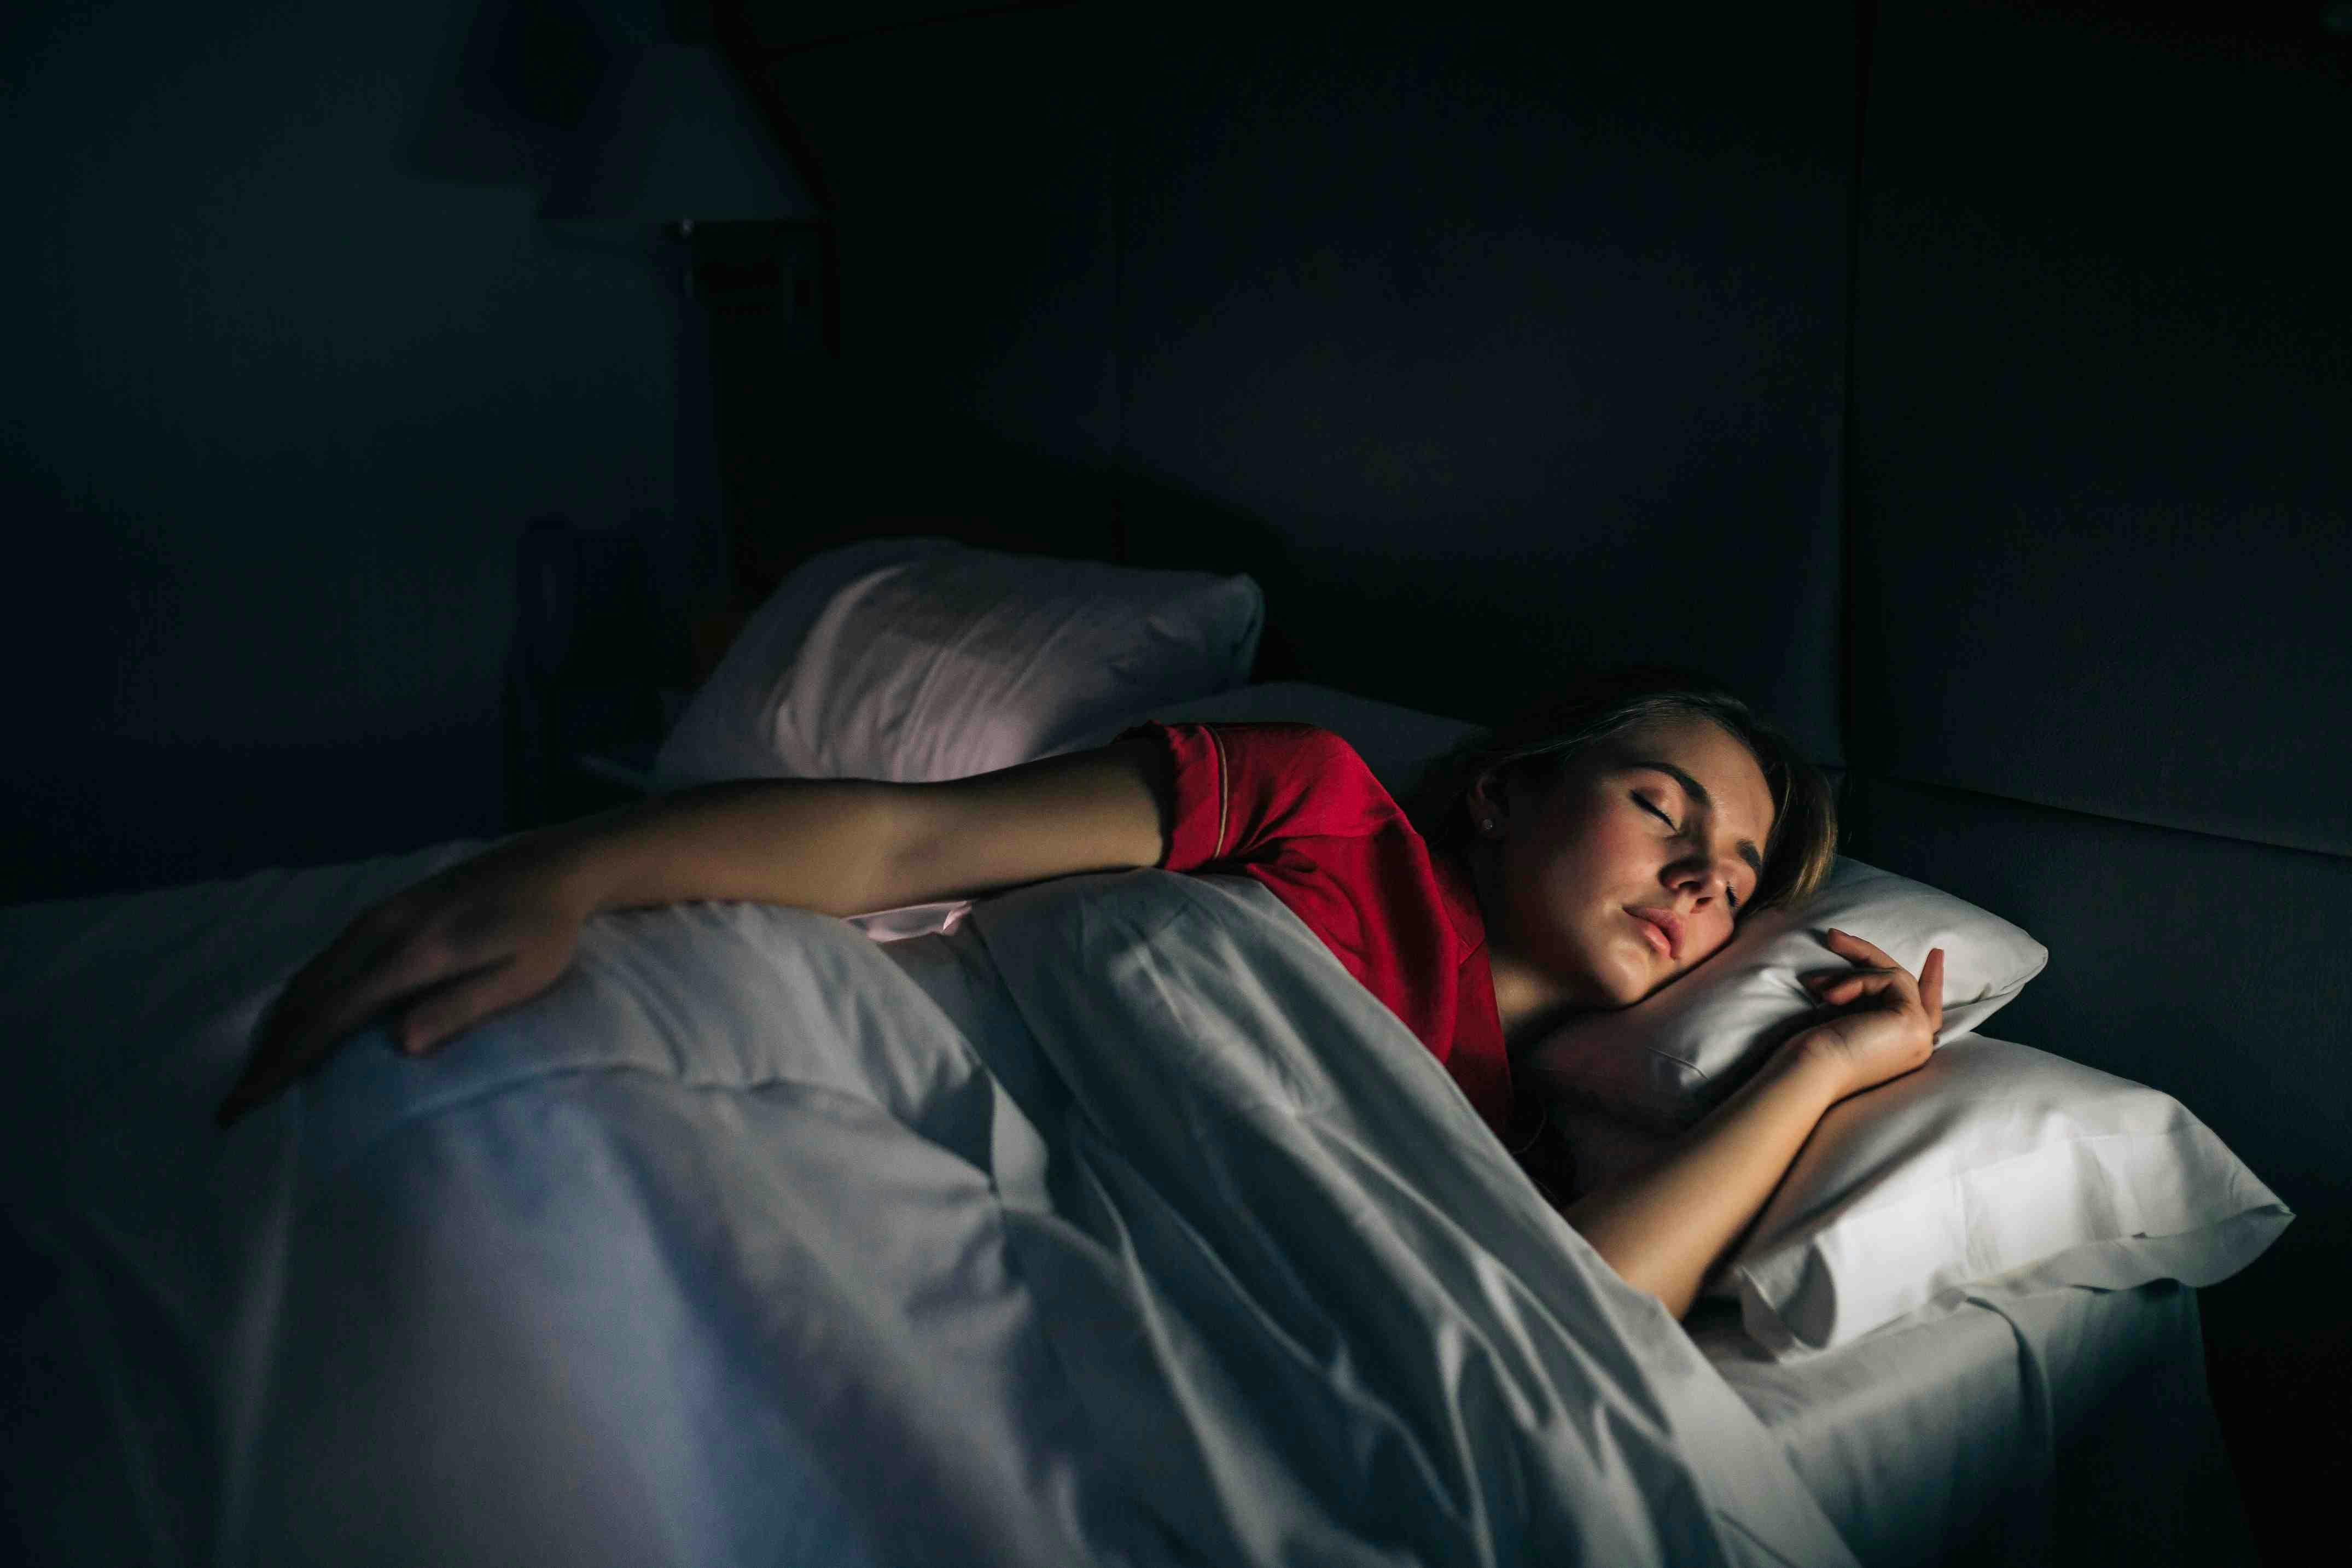 How to Get a Good Night's Sleep